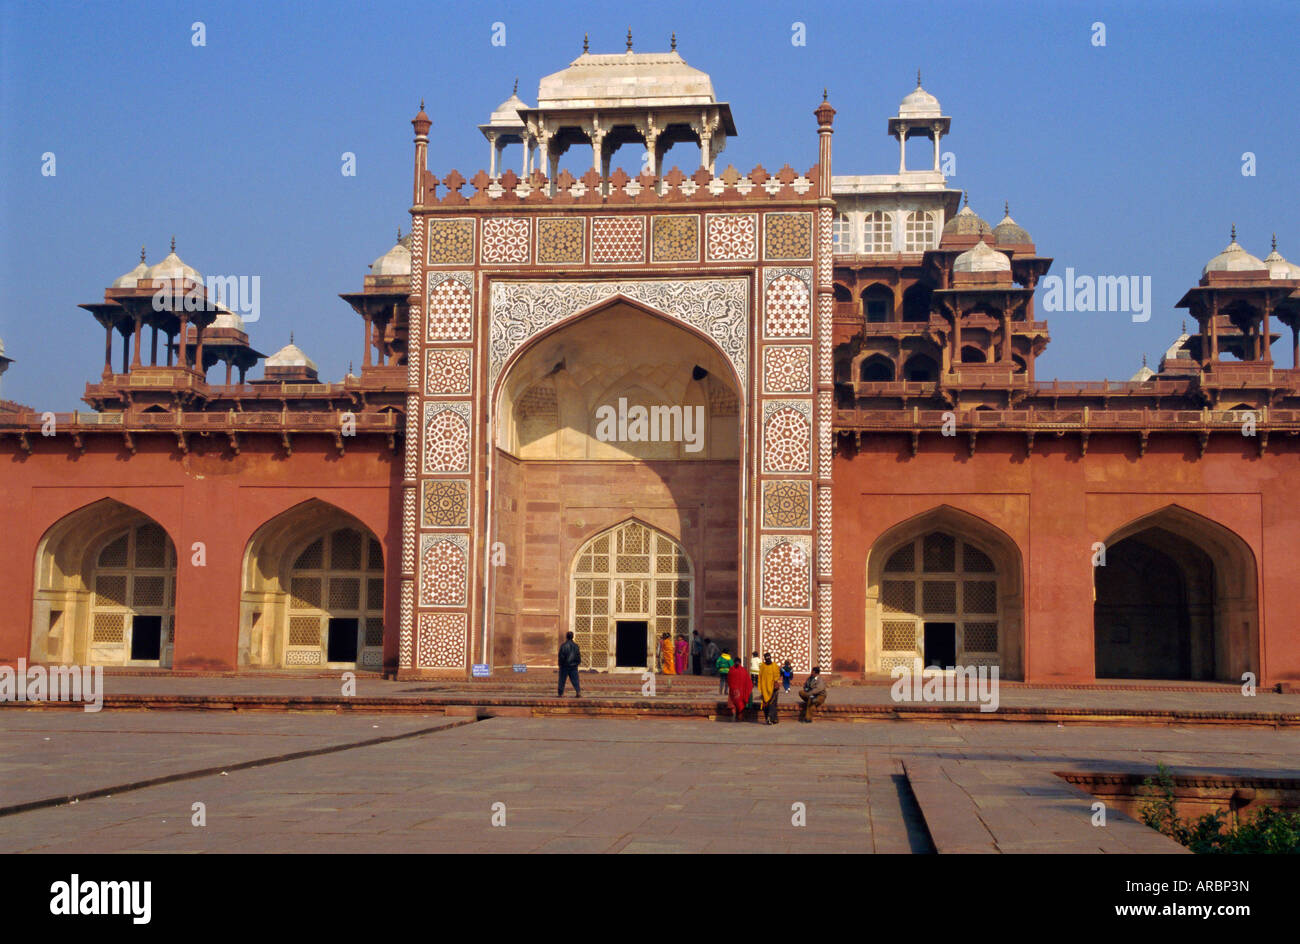 The Moghul emperor Akbar the Great's Mausoleum, built in 1602, at Sikandra, Agra, Uttar Pradesh, India Stock Photo